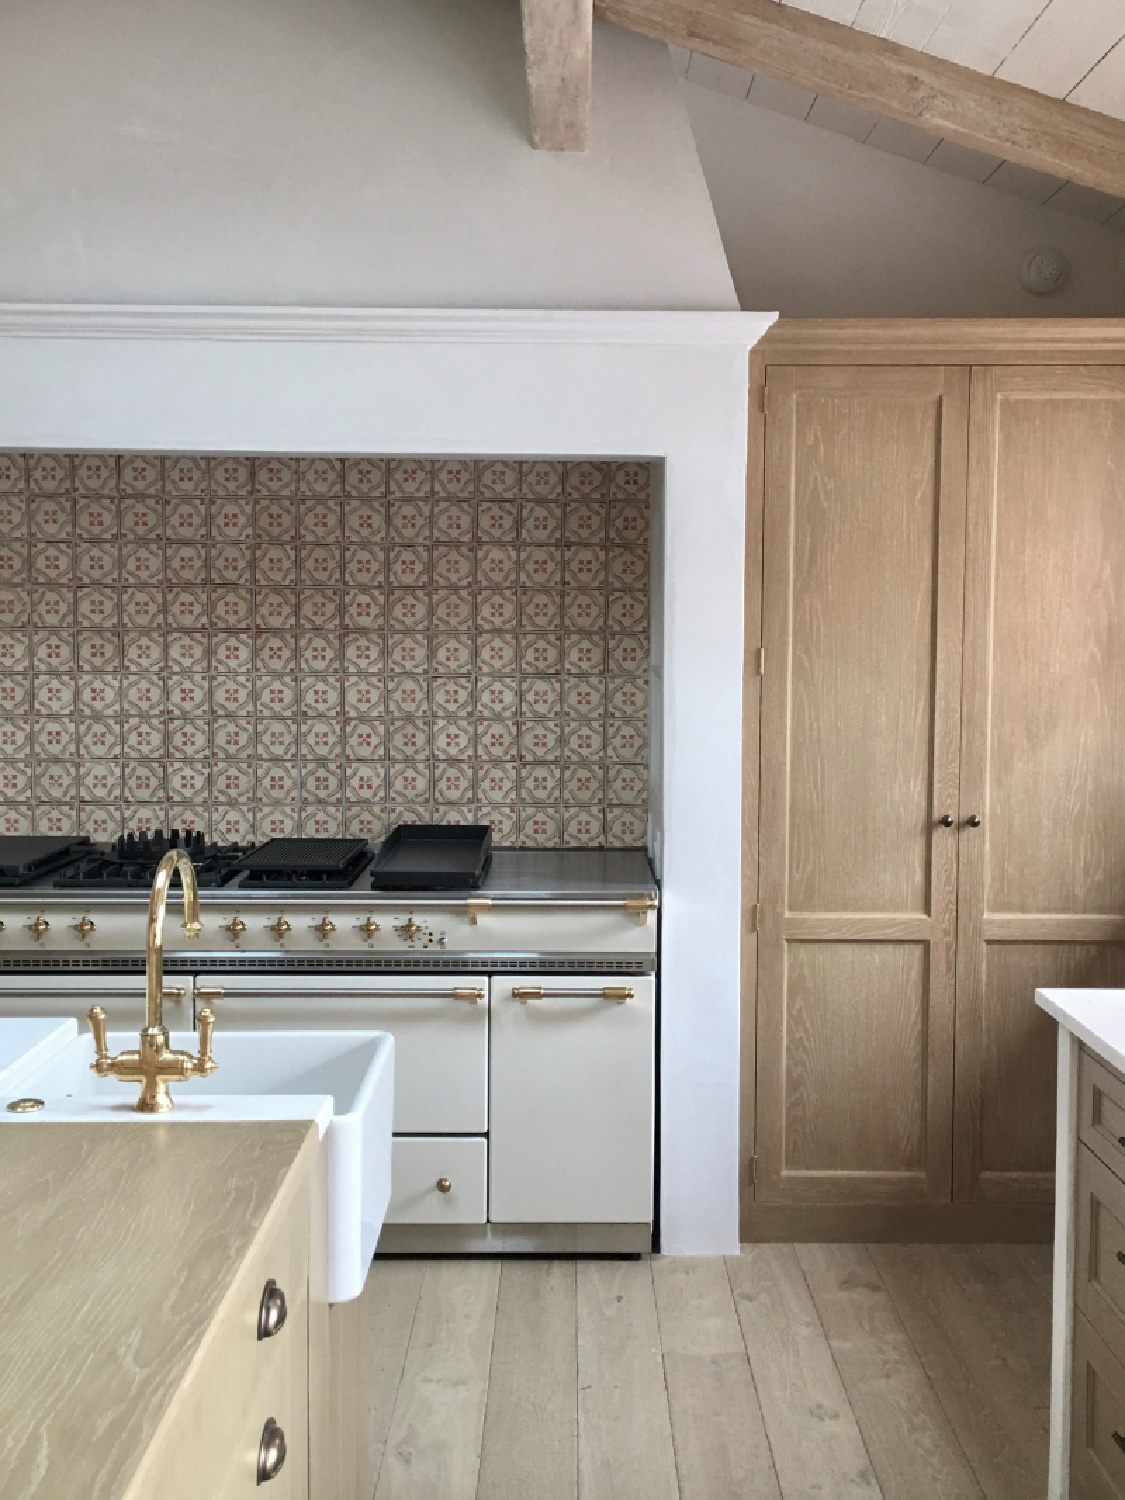 Detail of range and custom hood - Steve Giannetti designed modern Mediterranean Malibu home with white oak, natural finishes, limestone, and Old World style. #giannettihome #patinastyle #patinahomes